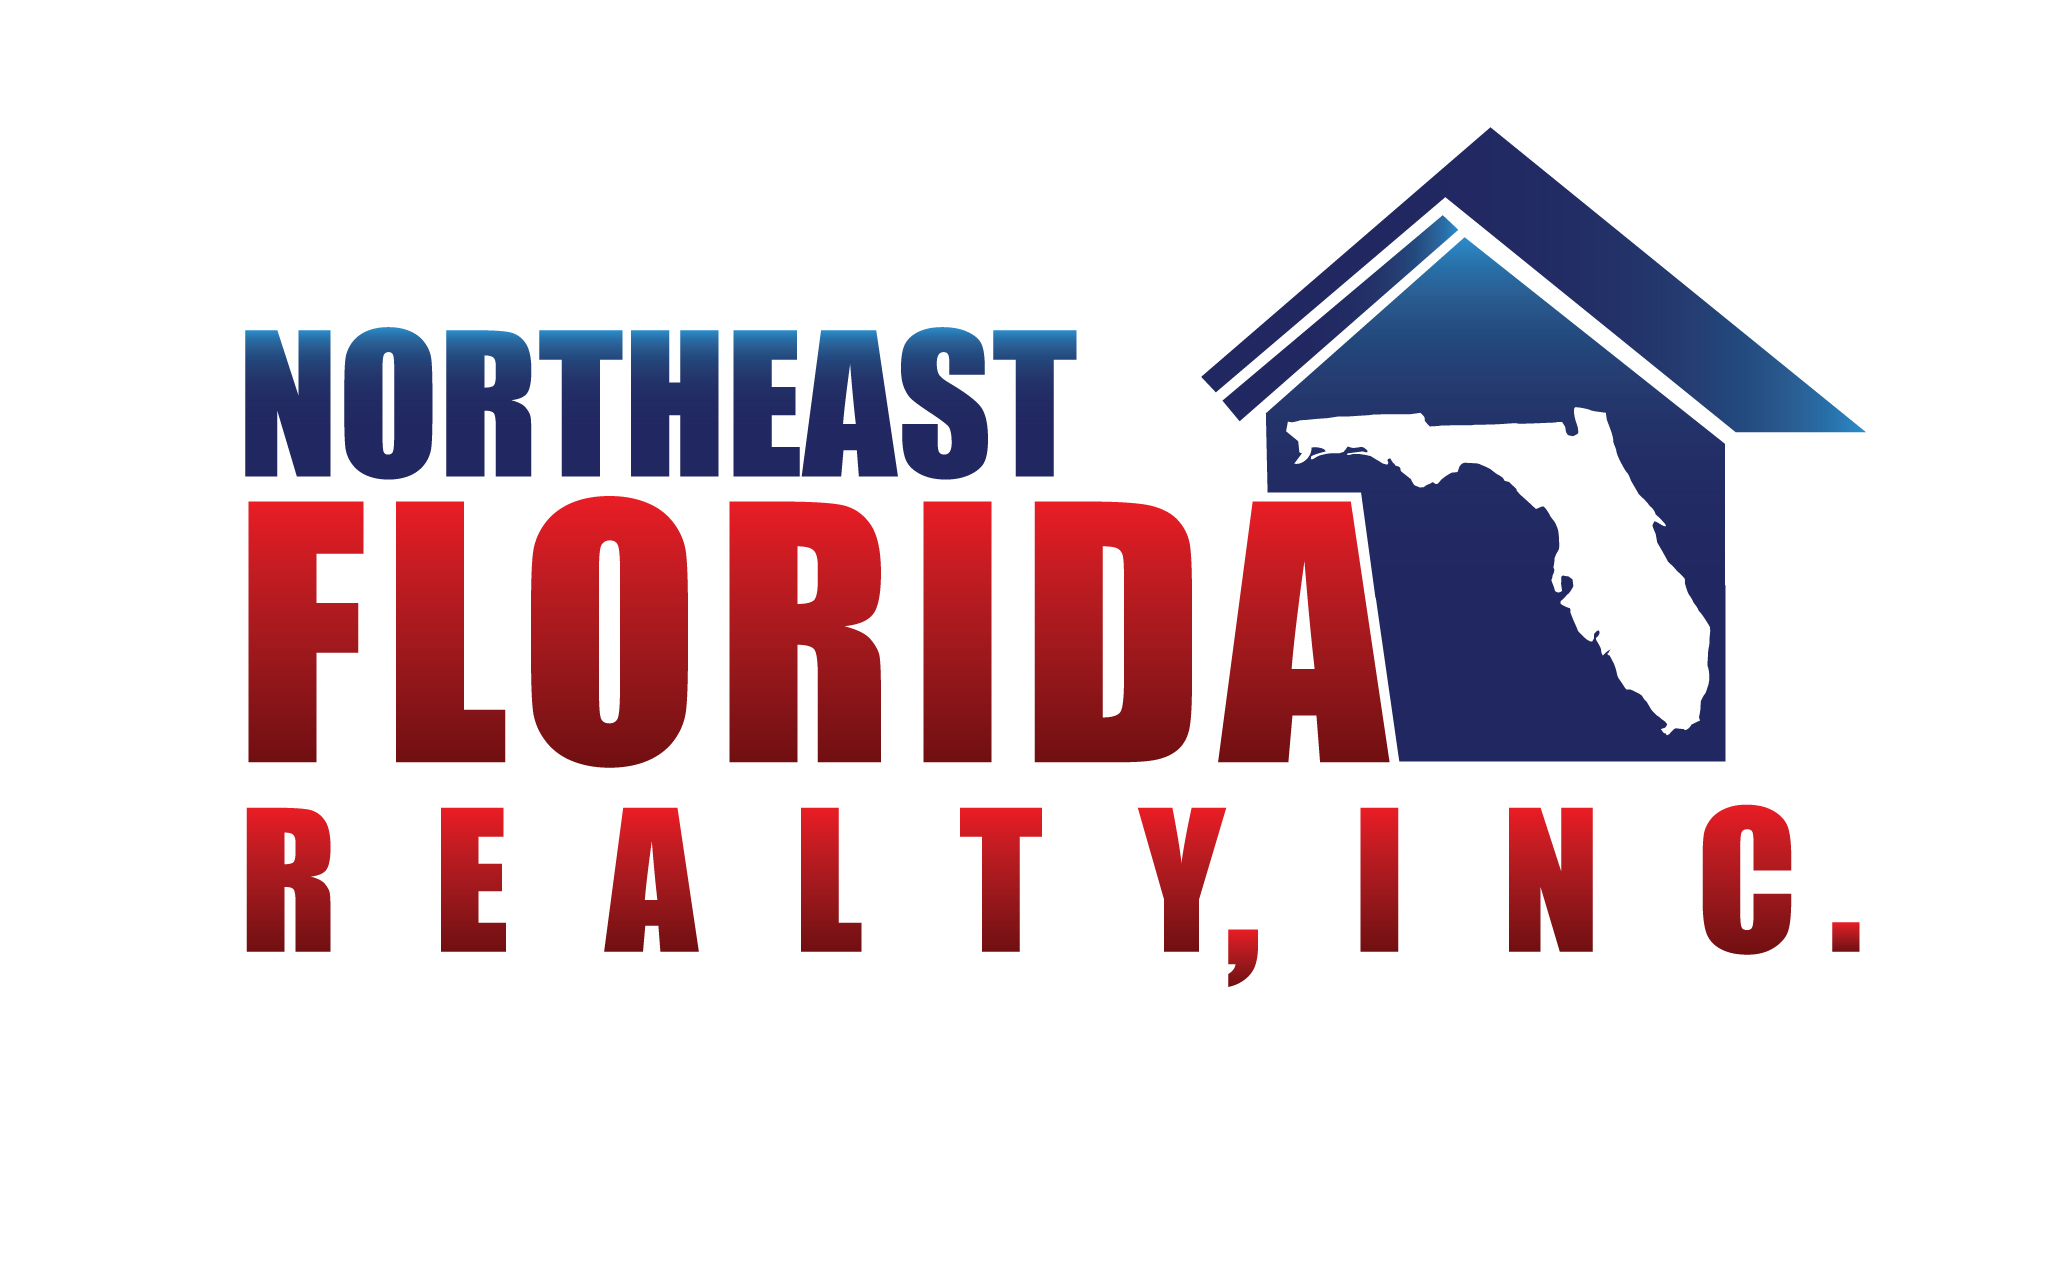 Northeast Florida Realty, Inc.